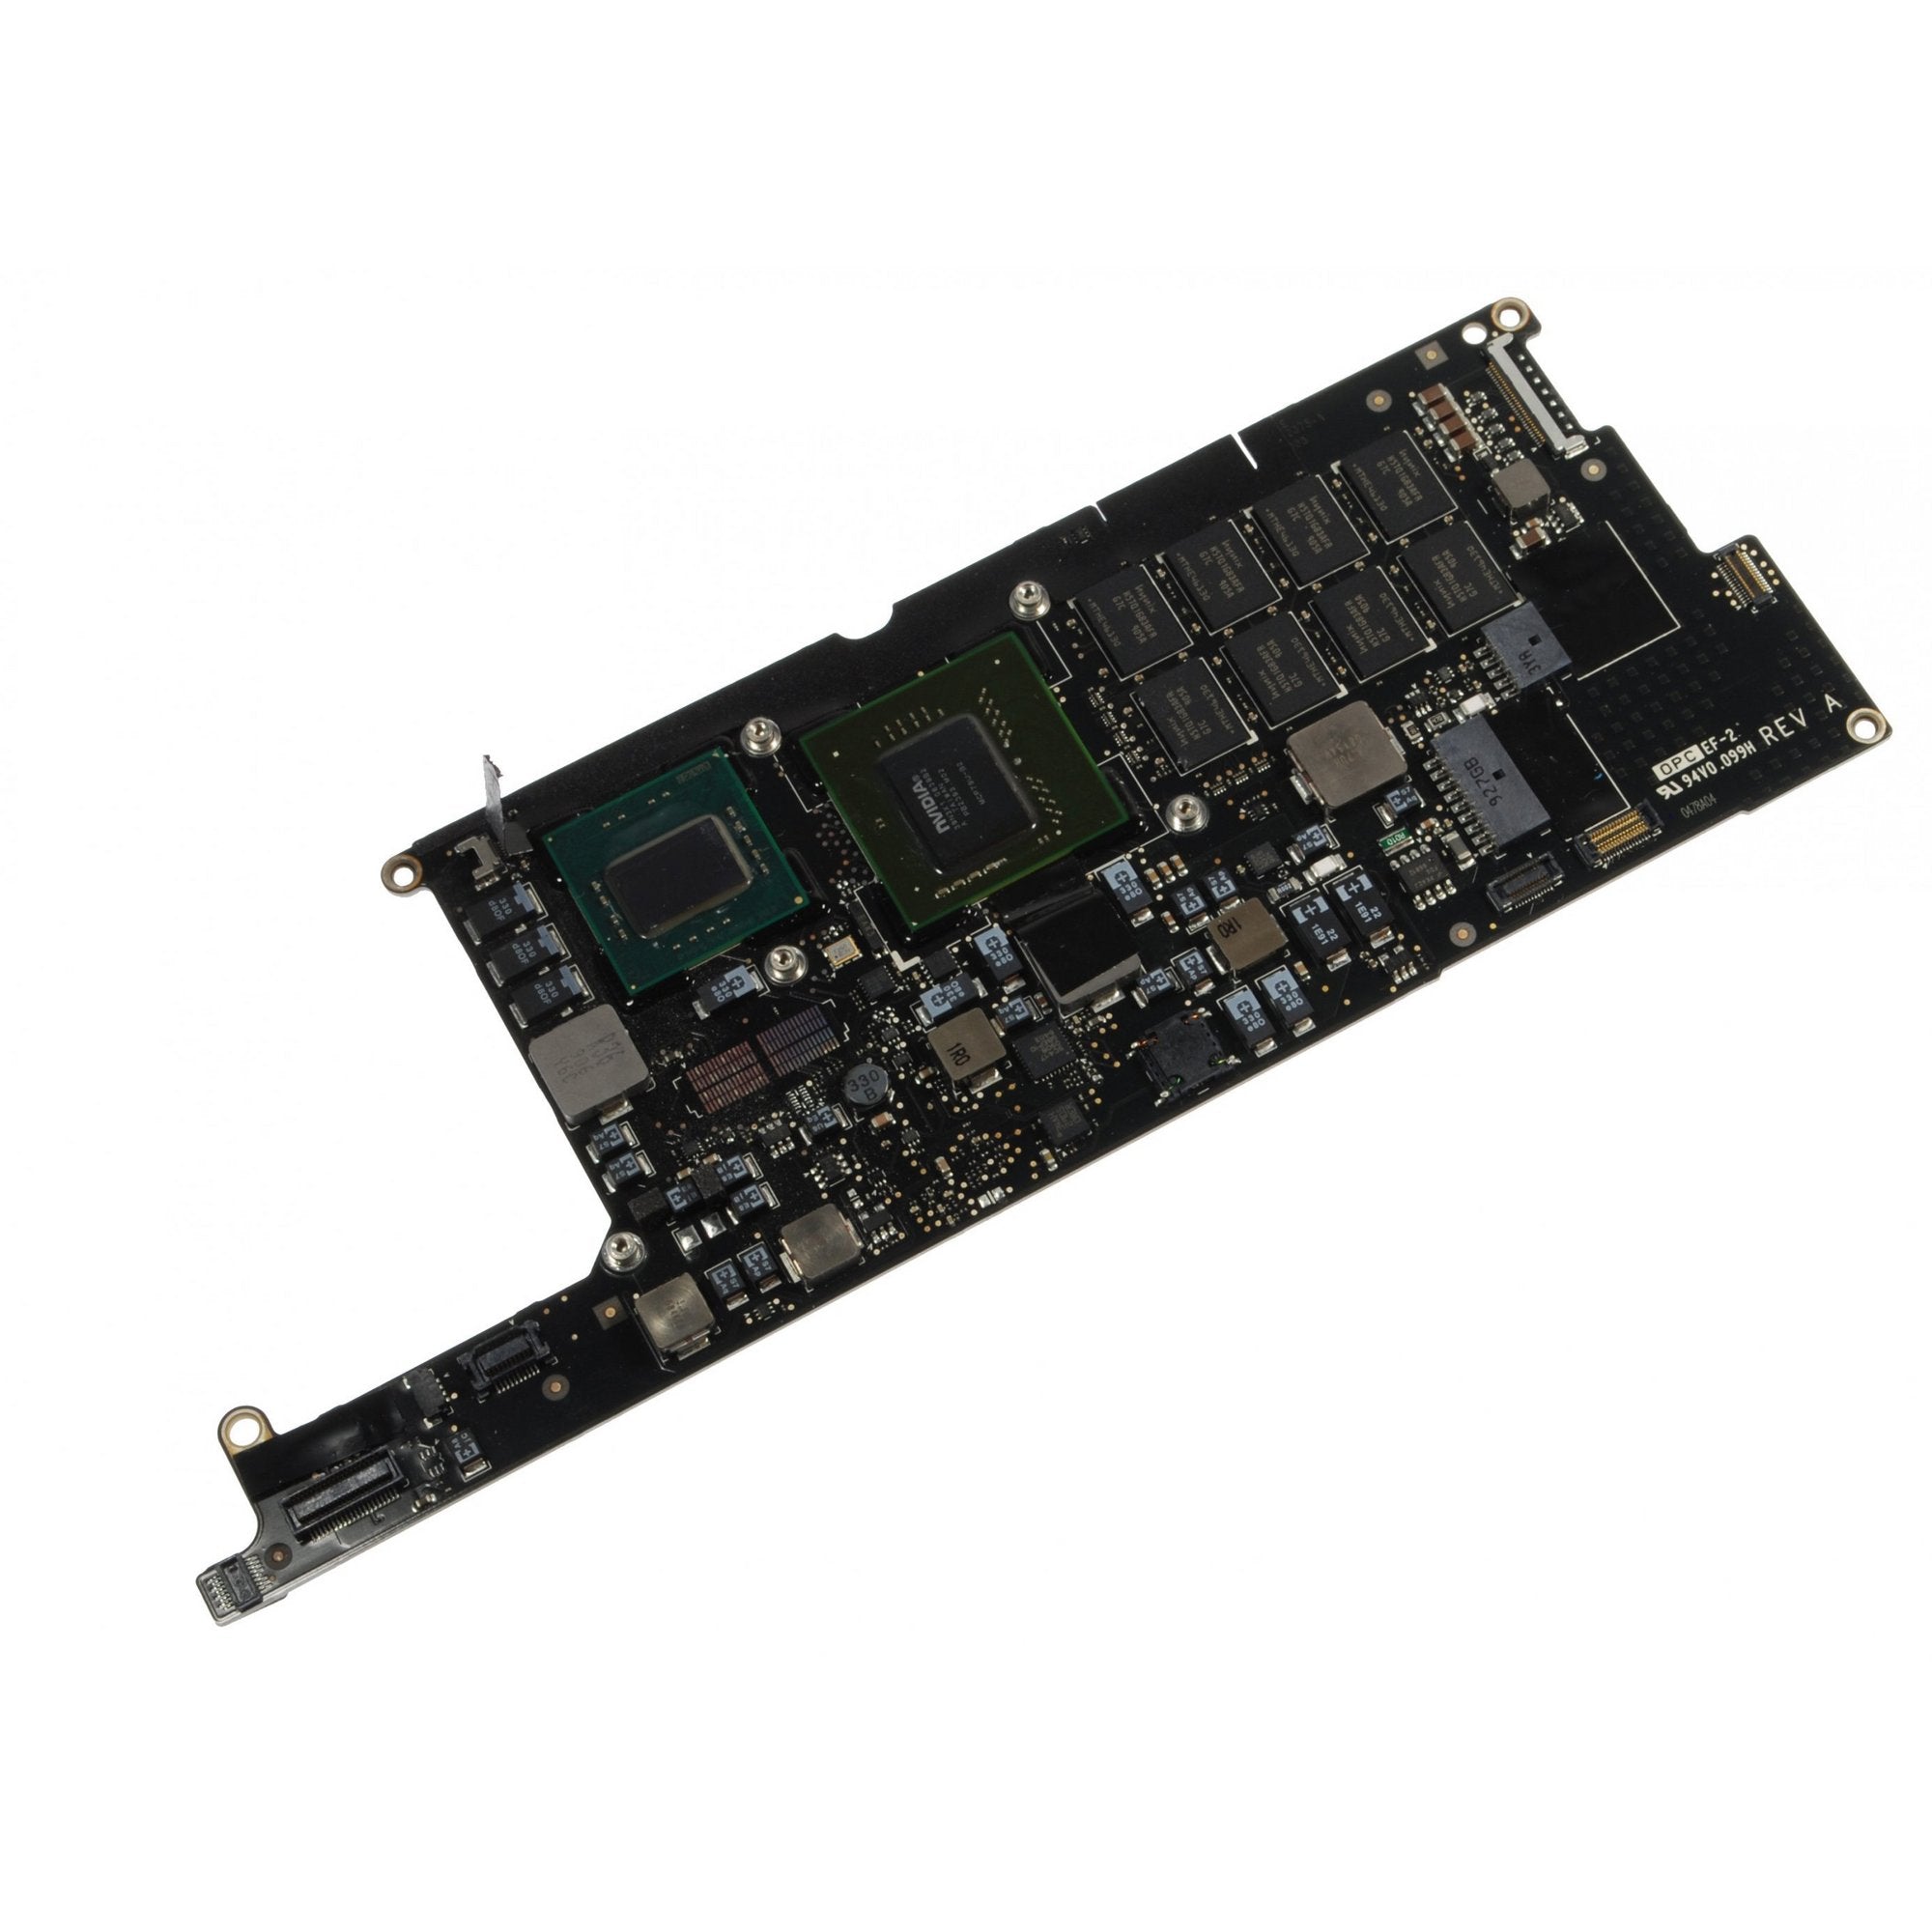 MacBook Air 1.6 GHz (Late 2008) Logic Board Used